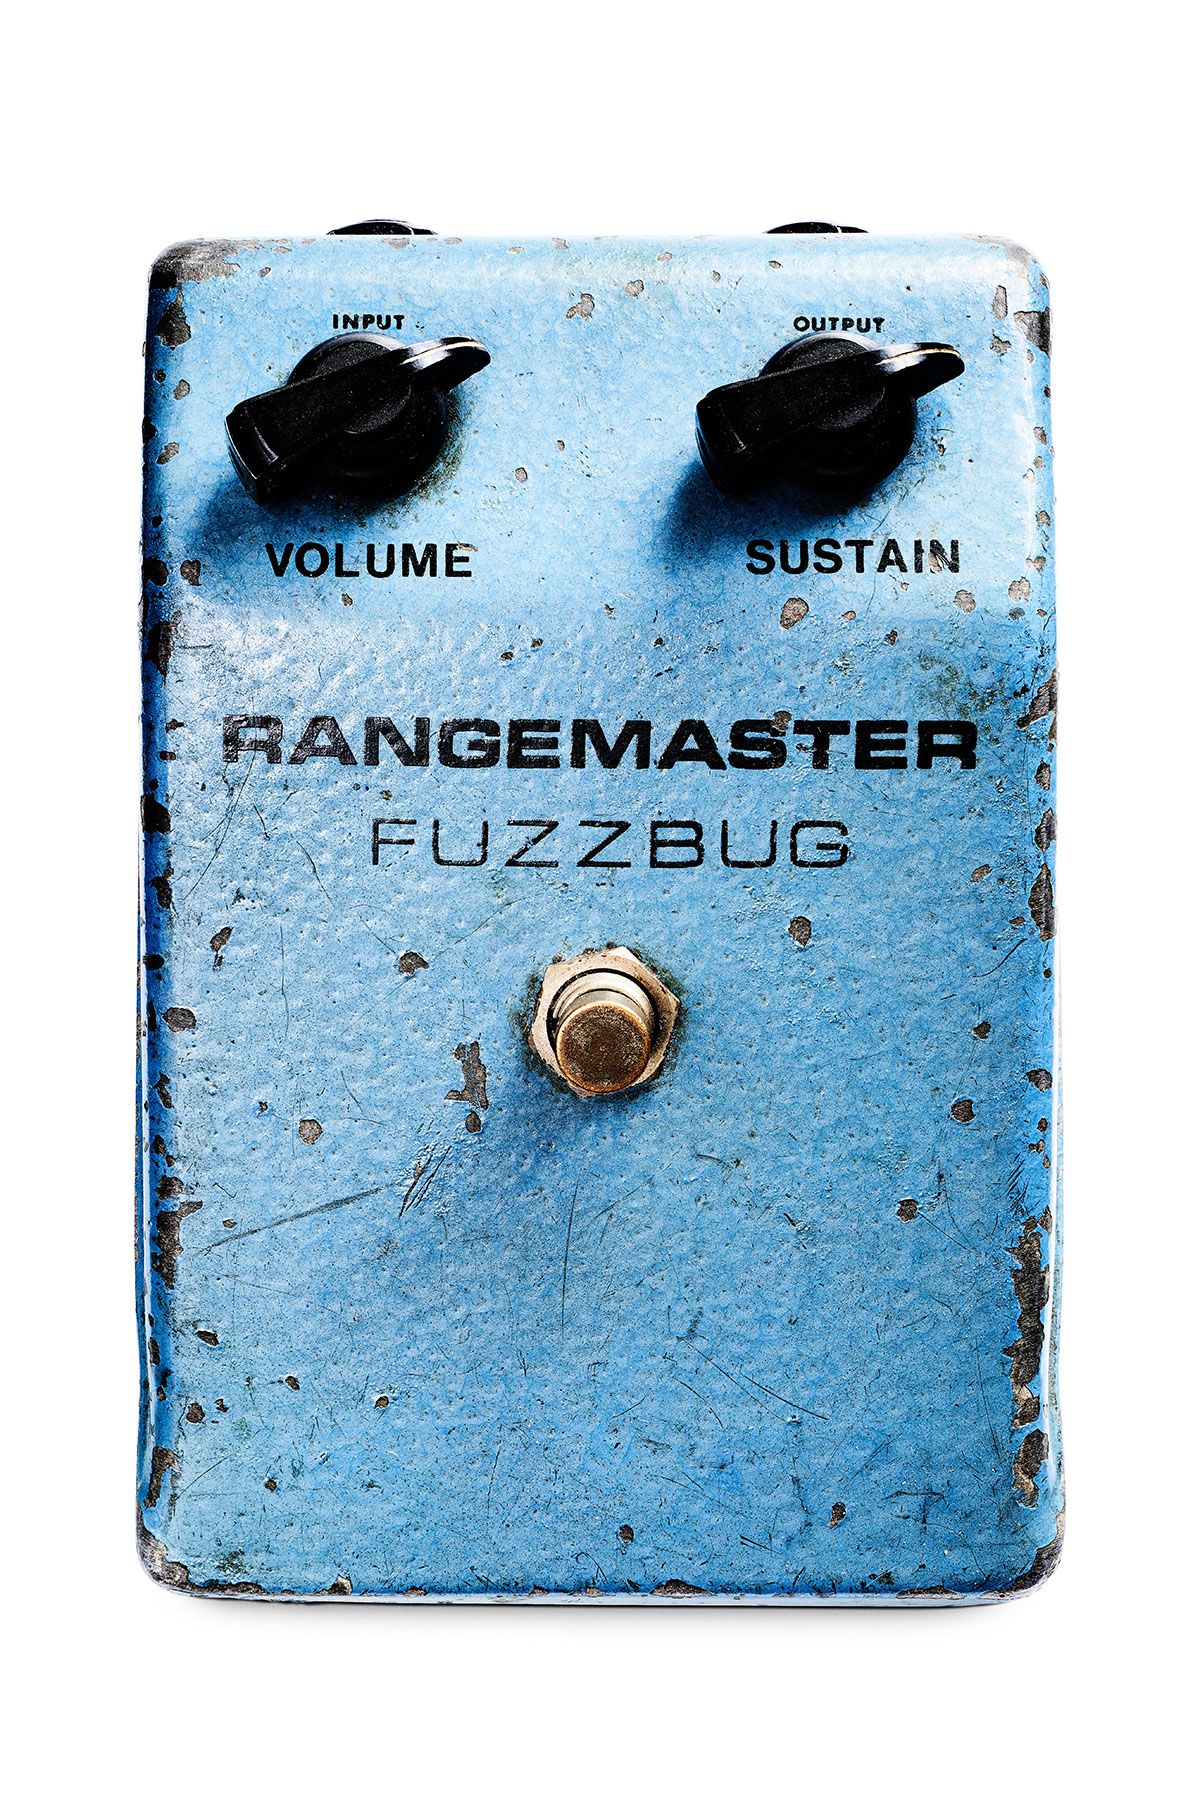 Rangemaster Fuzzbug